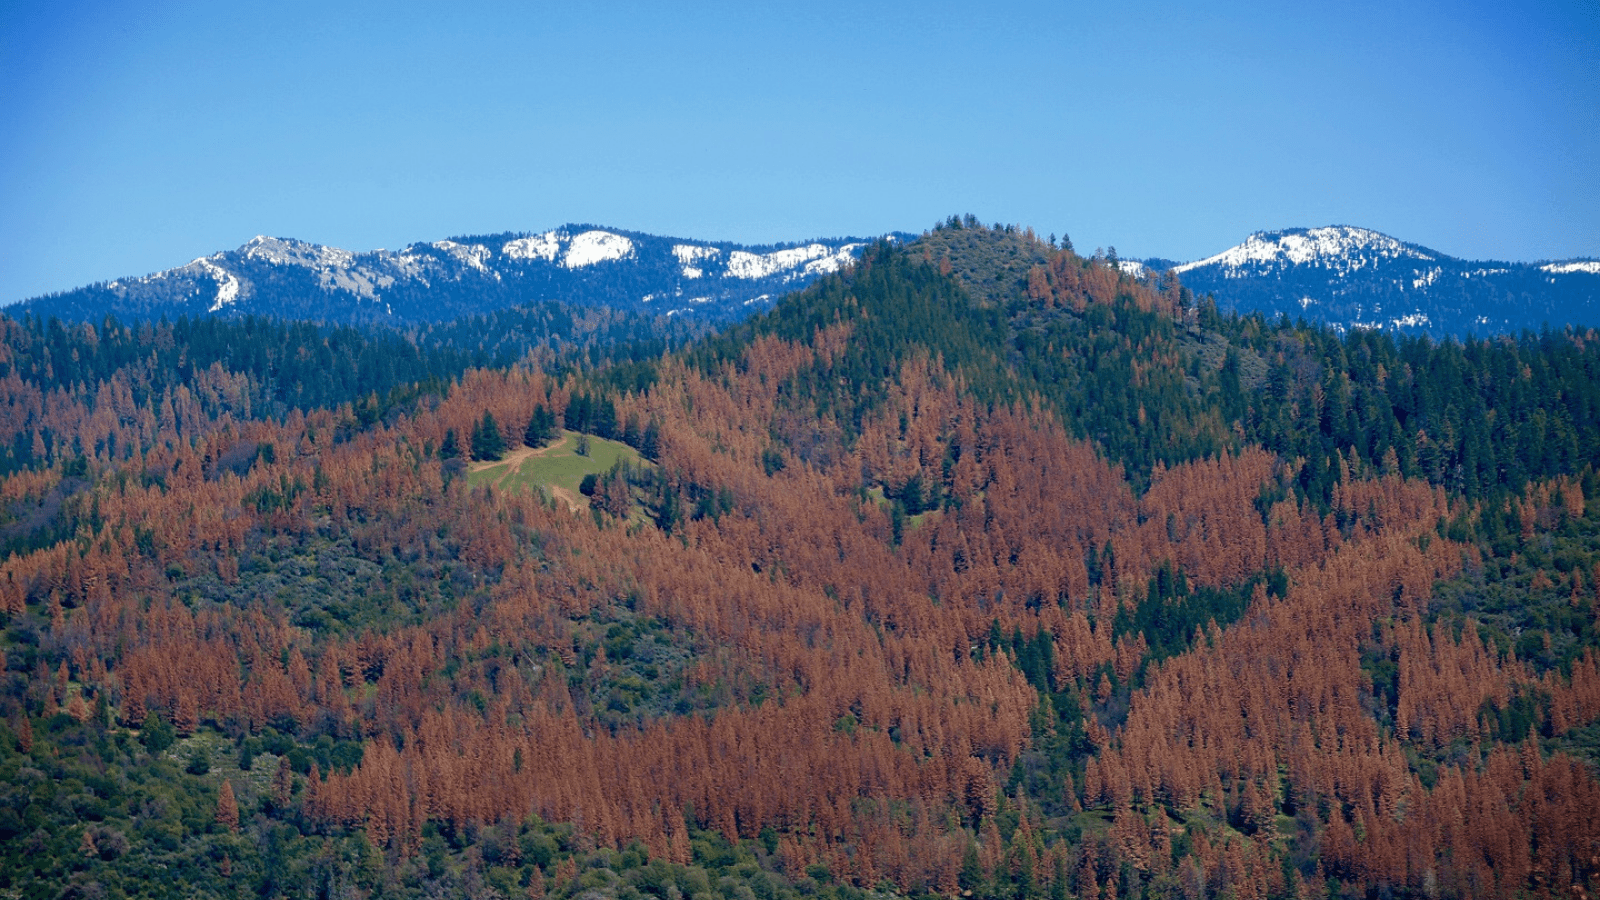 Dead trees on Sierra National Forest, California 2017